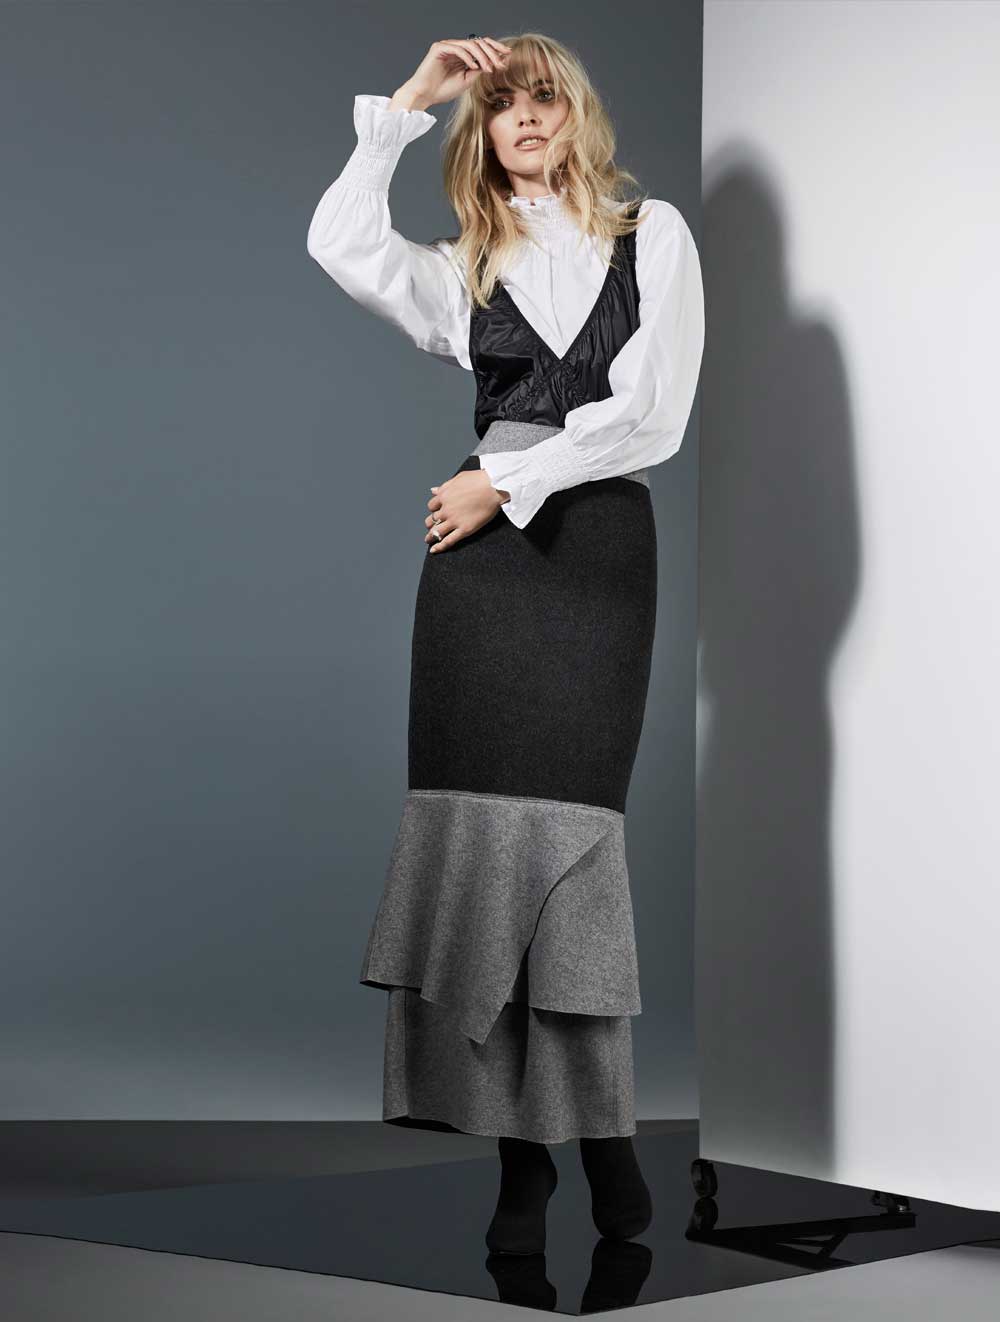 H&M blouse, $60. H&M Studio dress (worn as top), $70. Taylor dress (worn as skirt), $467. Sol Sana boots, $245.